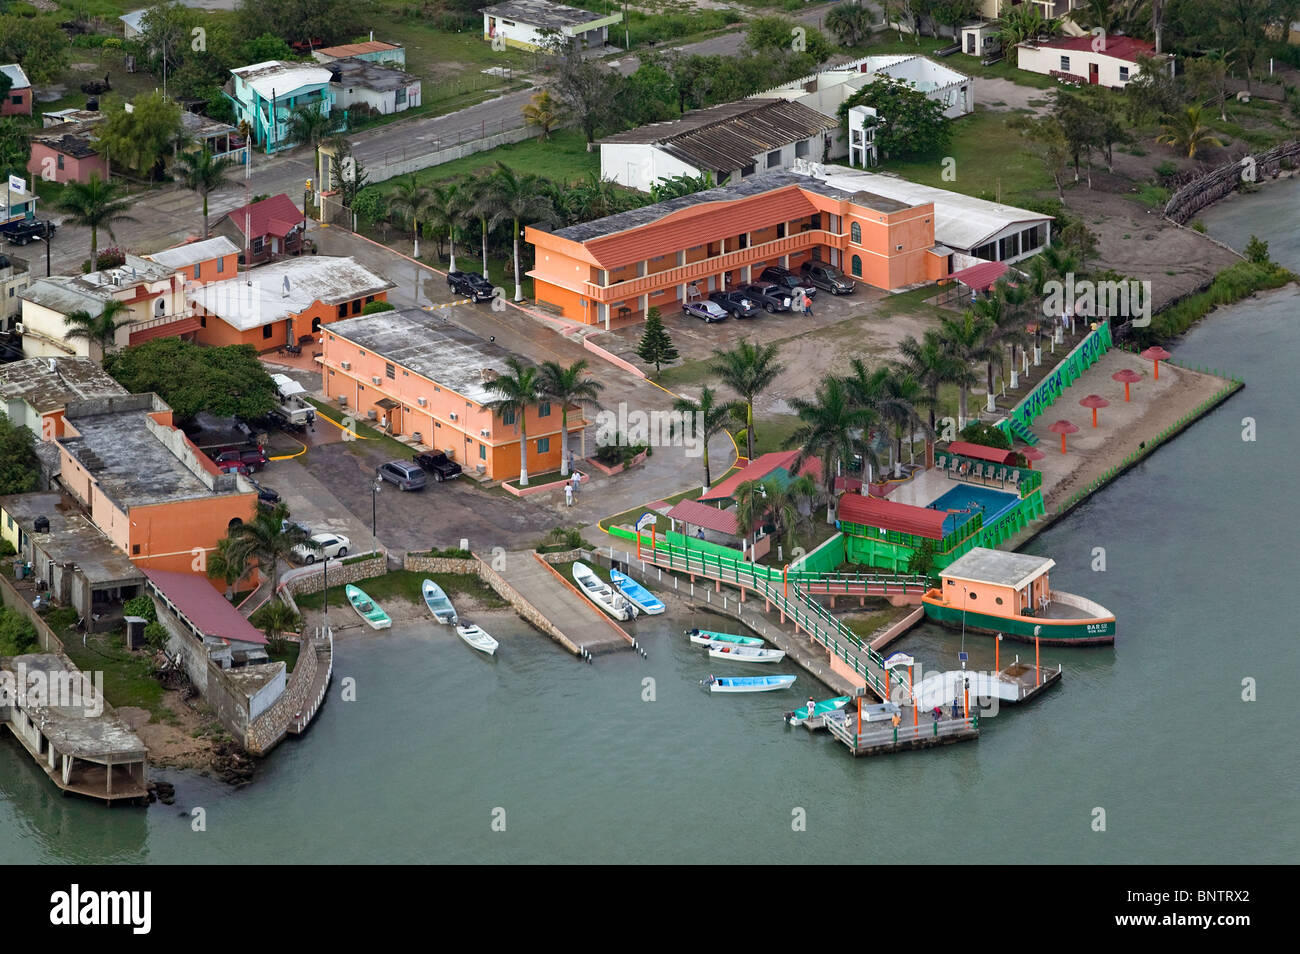 Vista aérea de la rivera del rio arriba hotel Río Soto La Marina La pesca fluvial Tamaulipas México Foto de stock